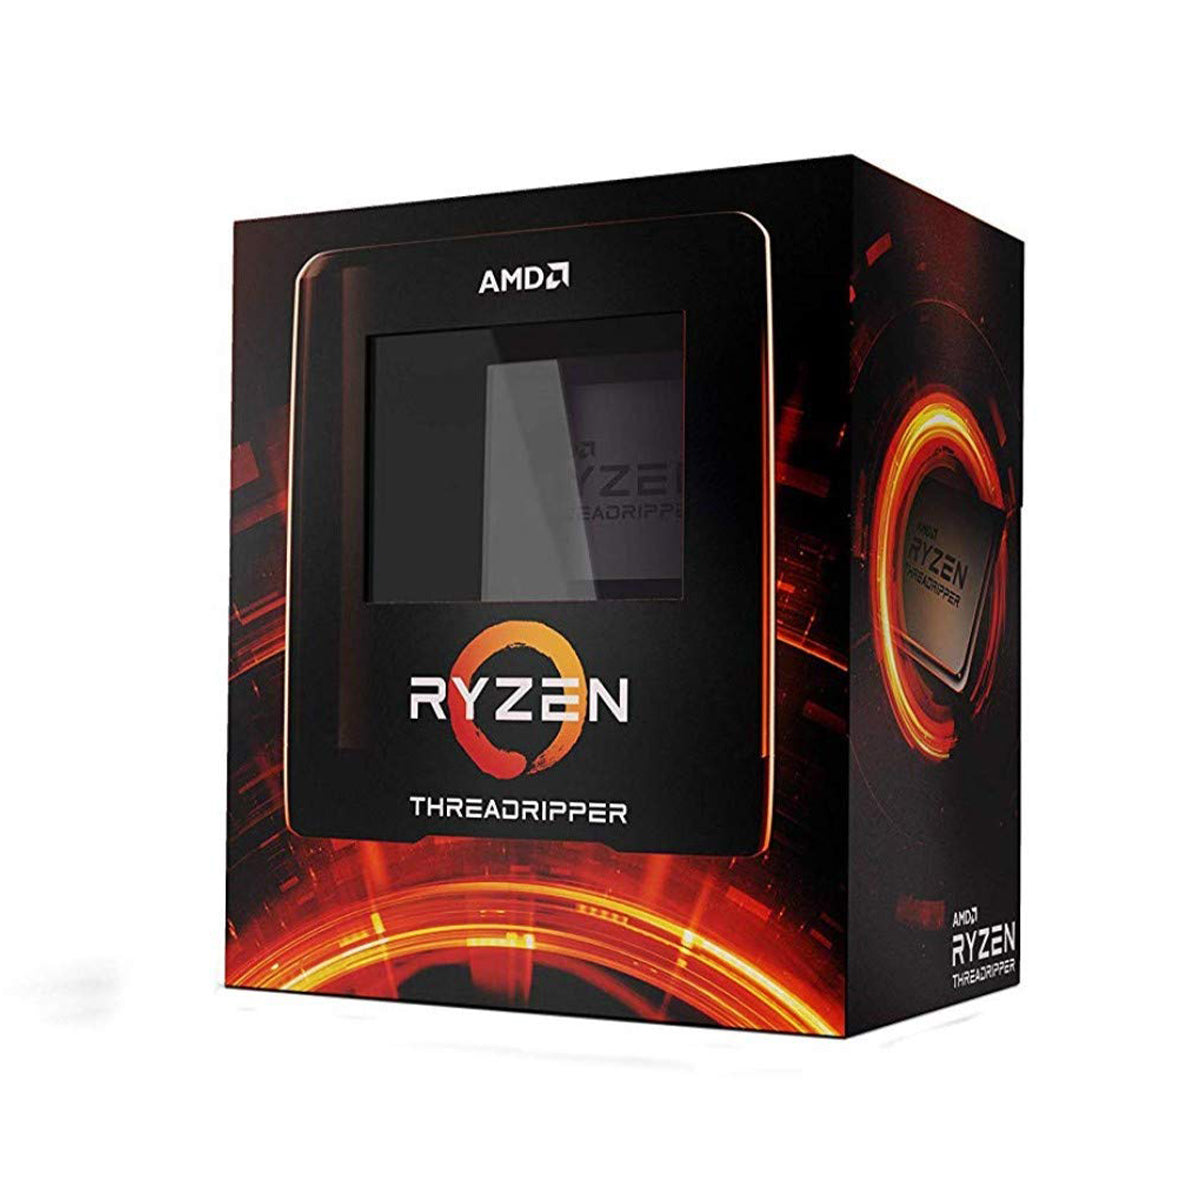 AMD Ryzen थ्रेडिपर 3990X डेस्कटॉप प्रोसेसर 64 कोर 4.3GHz तक 292MB कैश sTRX4 सॉकेट